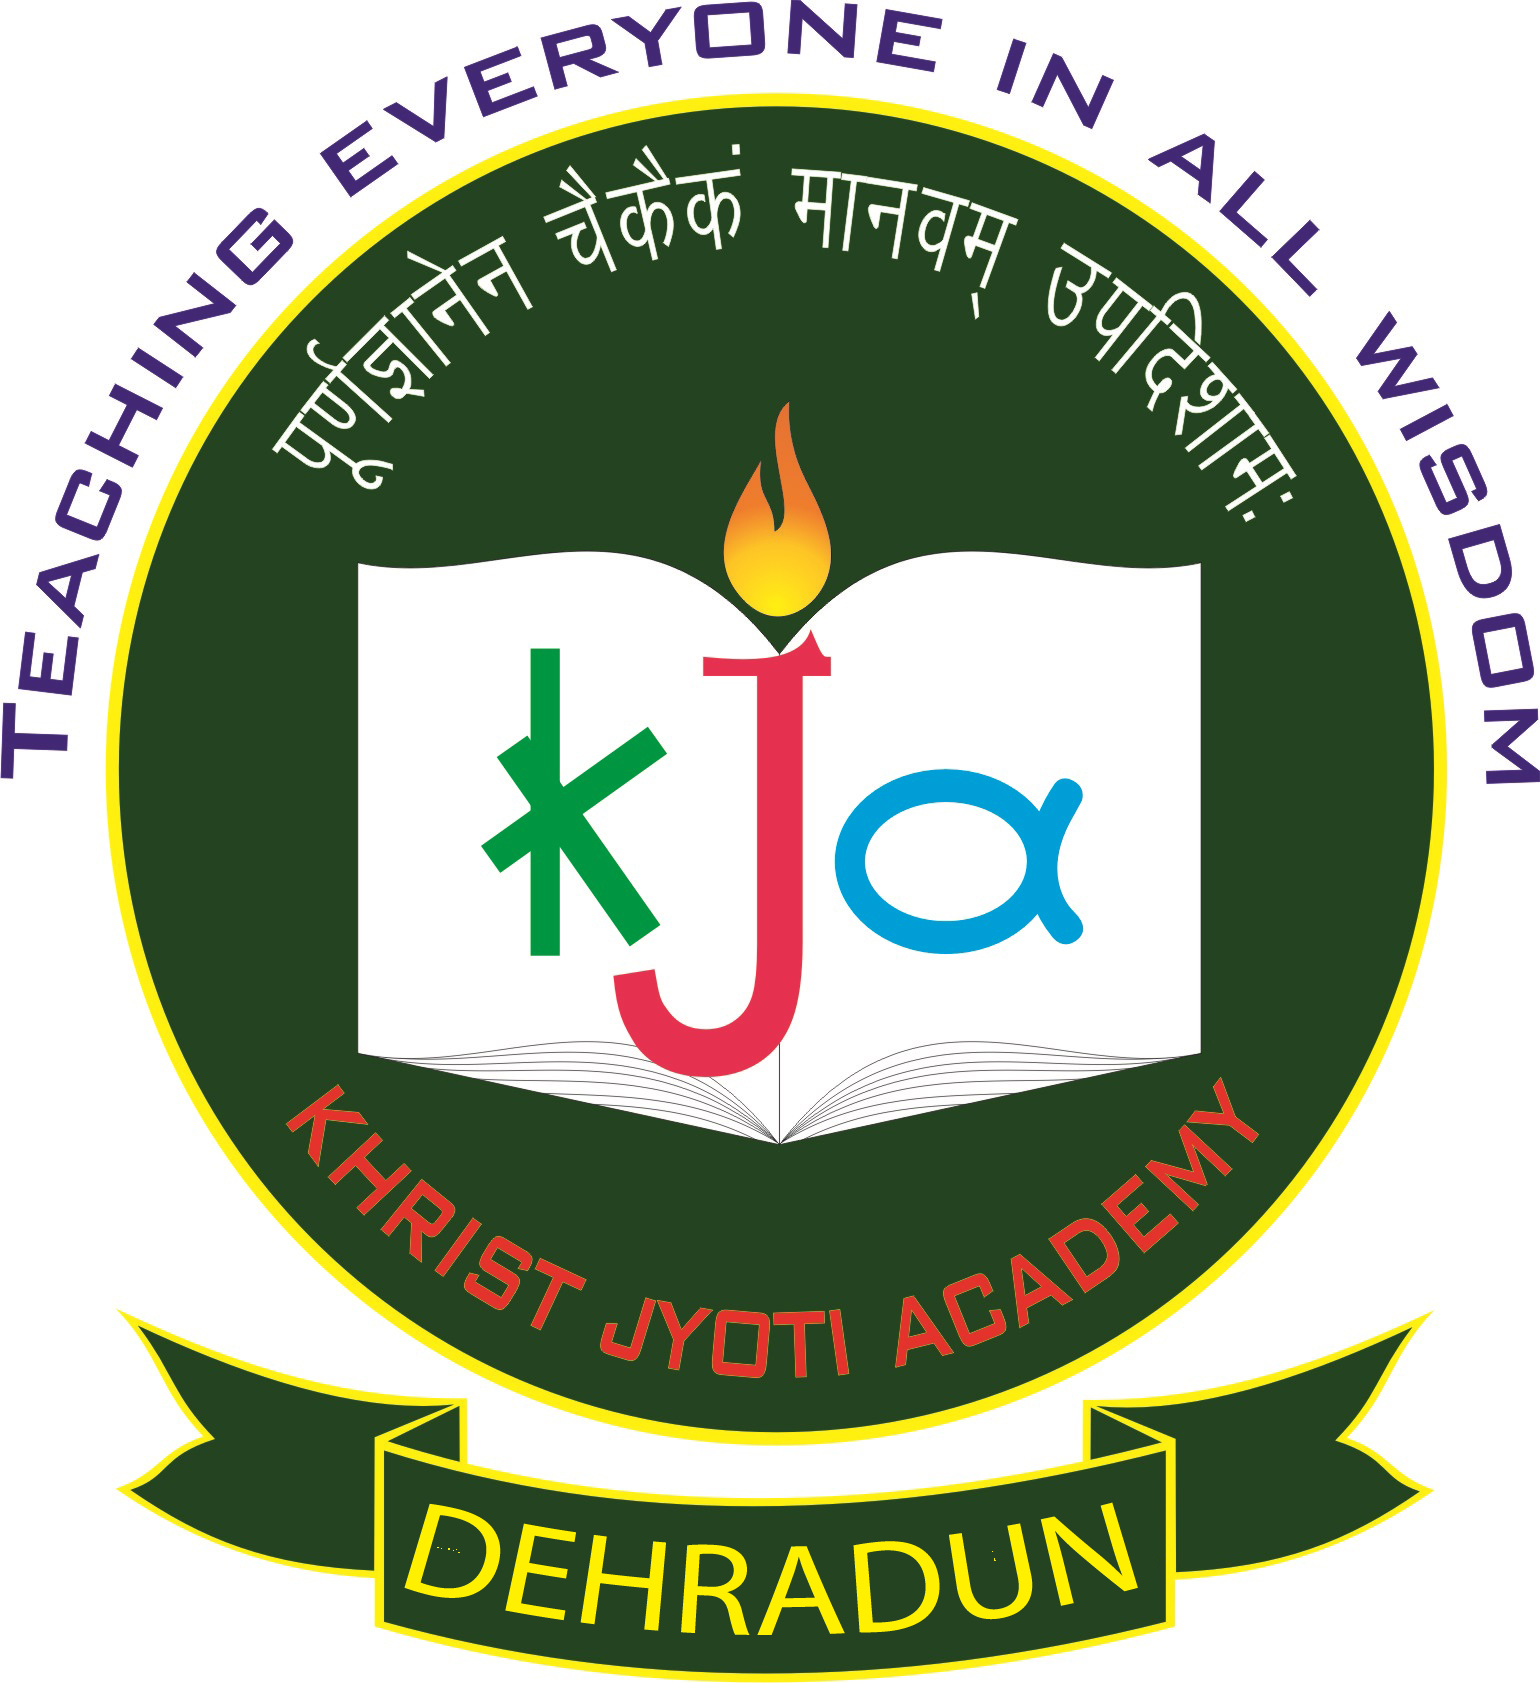 Khrist Jyoti Academy